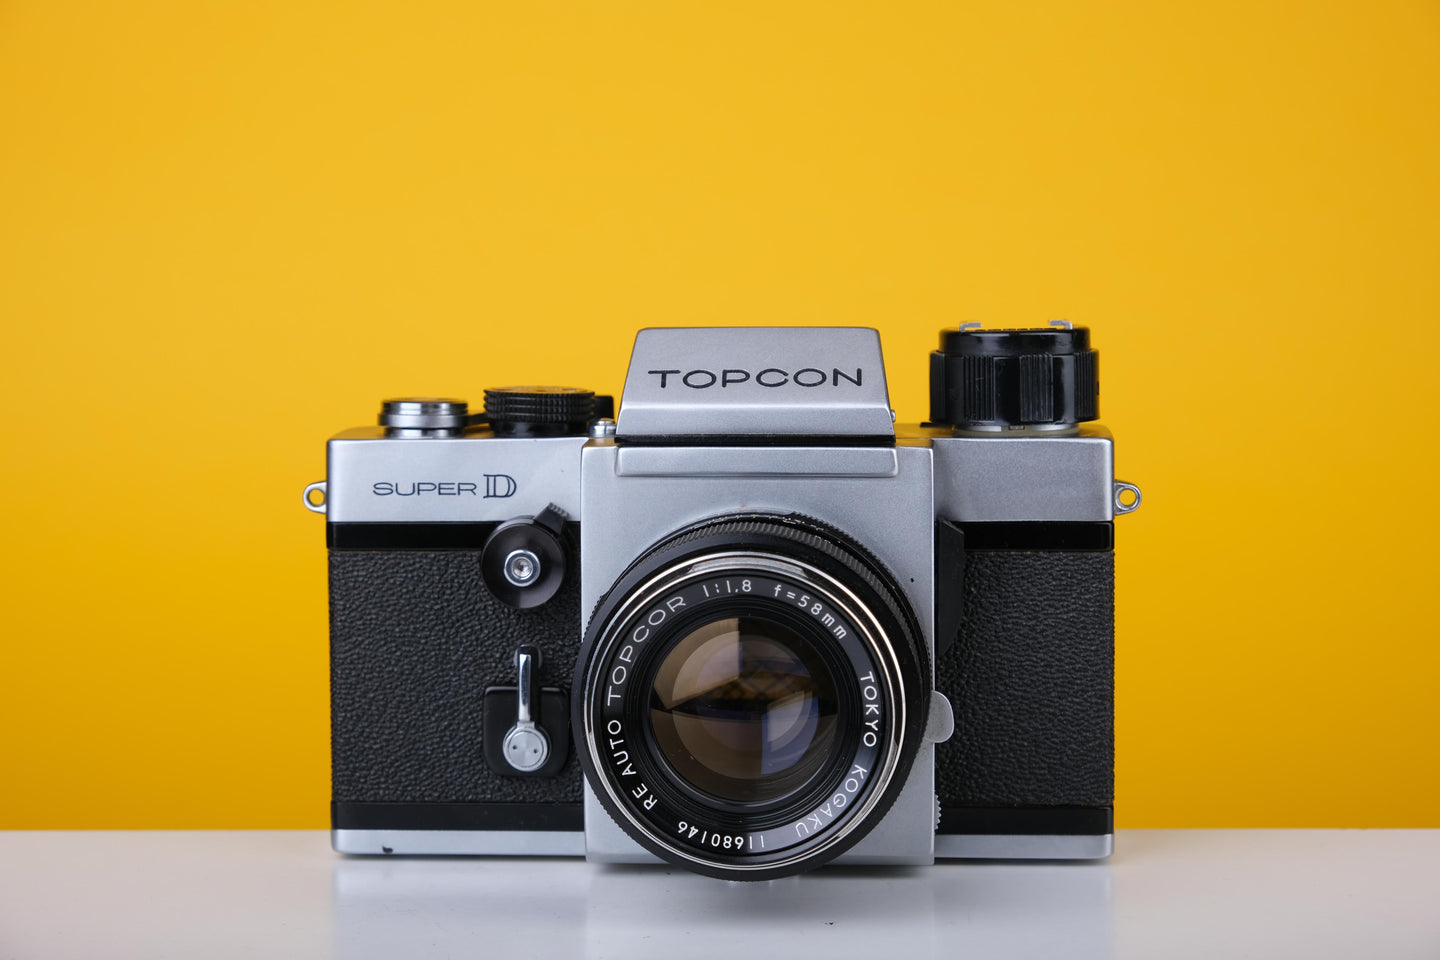 Topcom Super D 35mm Film Camera with Topcor 58mm f/1.8 Lens and Case